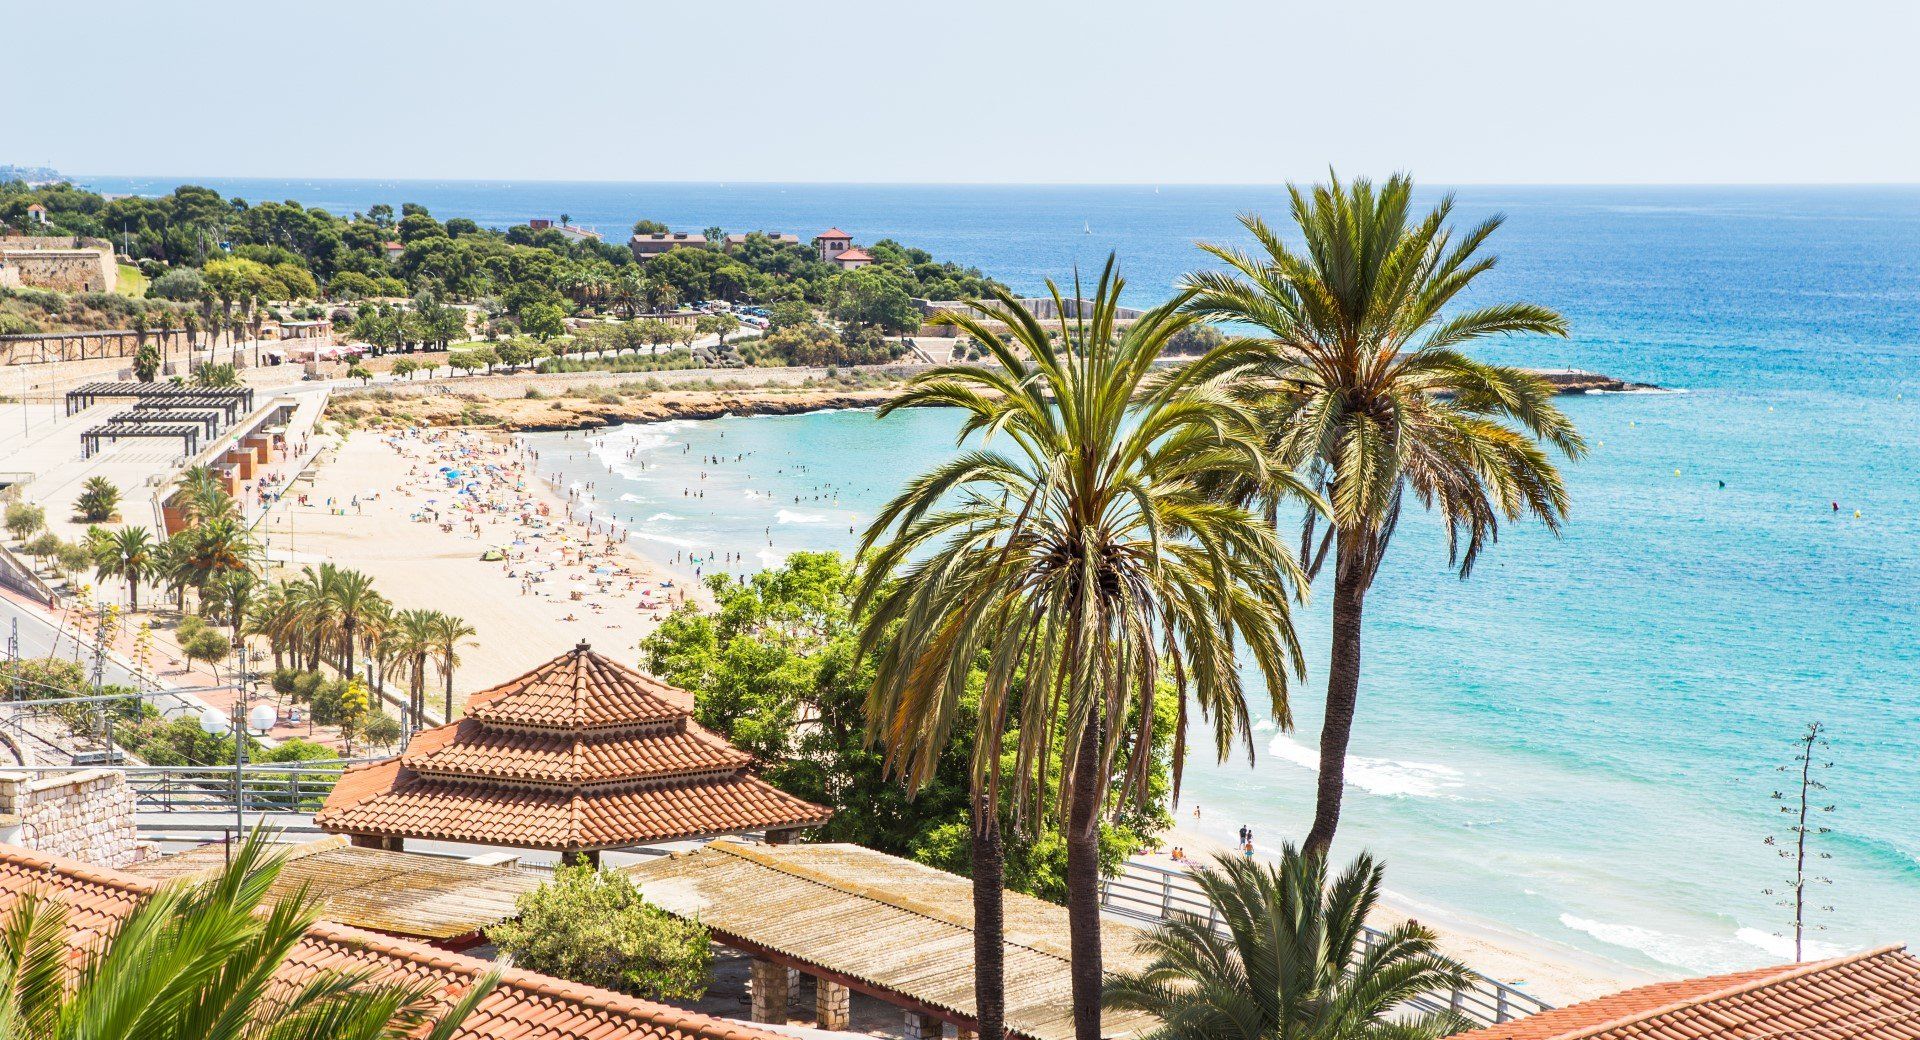 The historic province of Tarragona boasts 15km of coastline and fine golden sand